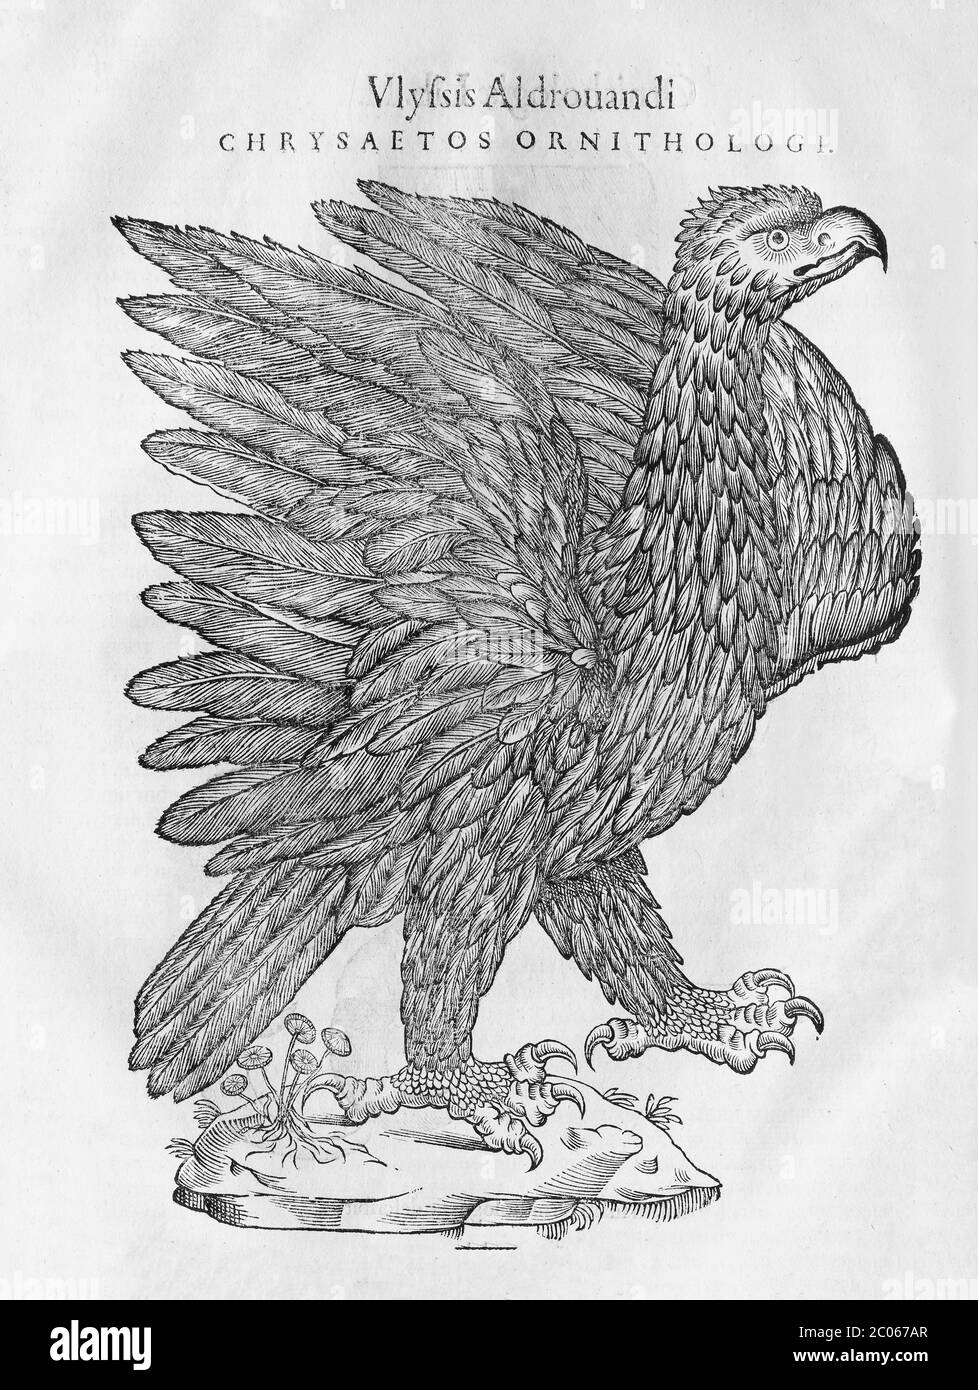 Águila dorada (Aquila chrysaetos), ilustración de madera: Ornithologiae hoc est de avibus Historiae Libri XII por Ulysses Aldrovandi (1522-1603) Foto de stock